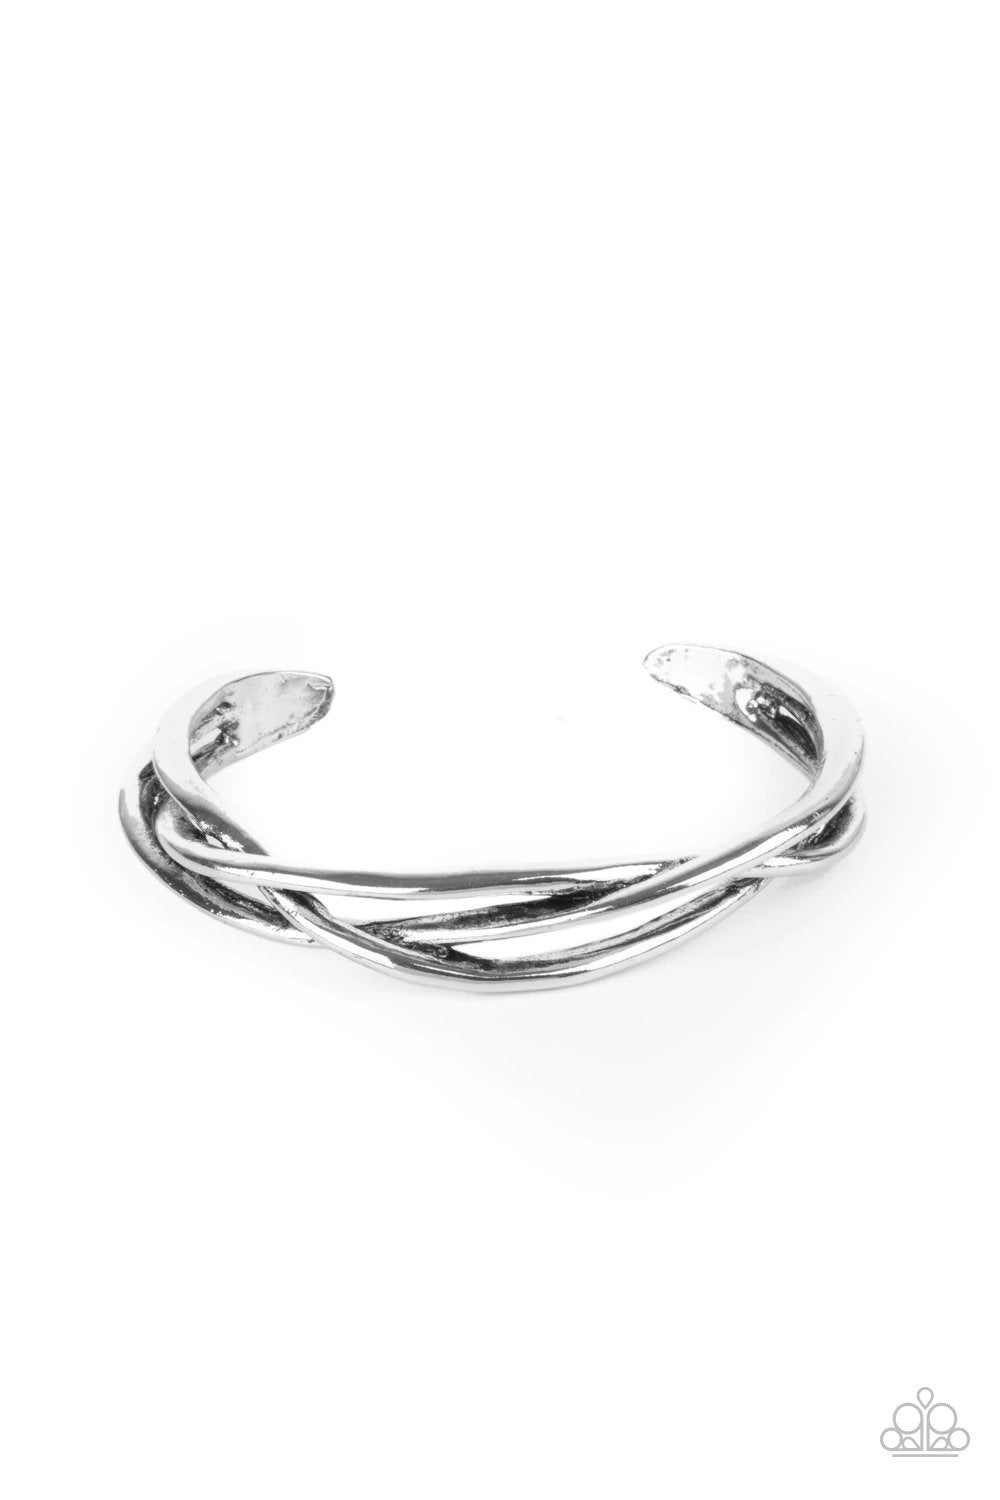 PLAIT Techtonics Silver Bracelet - Paparazzi Accessories- lightbox - CarasShop.com - $5 Jewelry by Cara Jewels